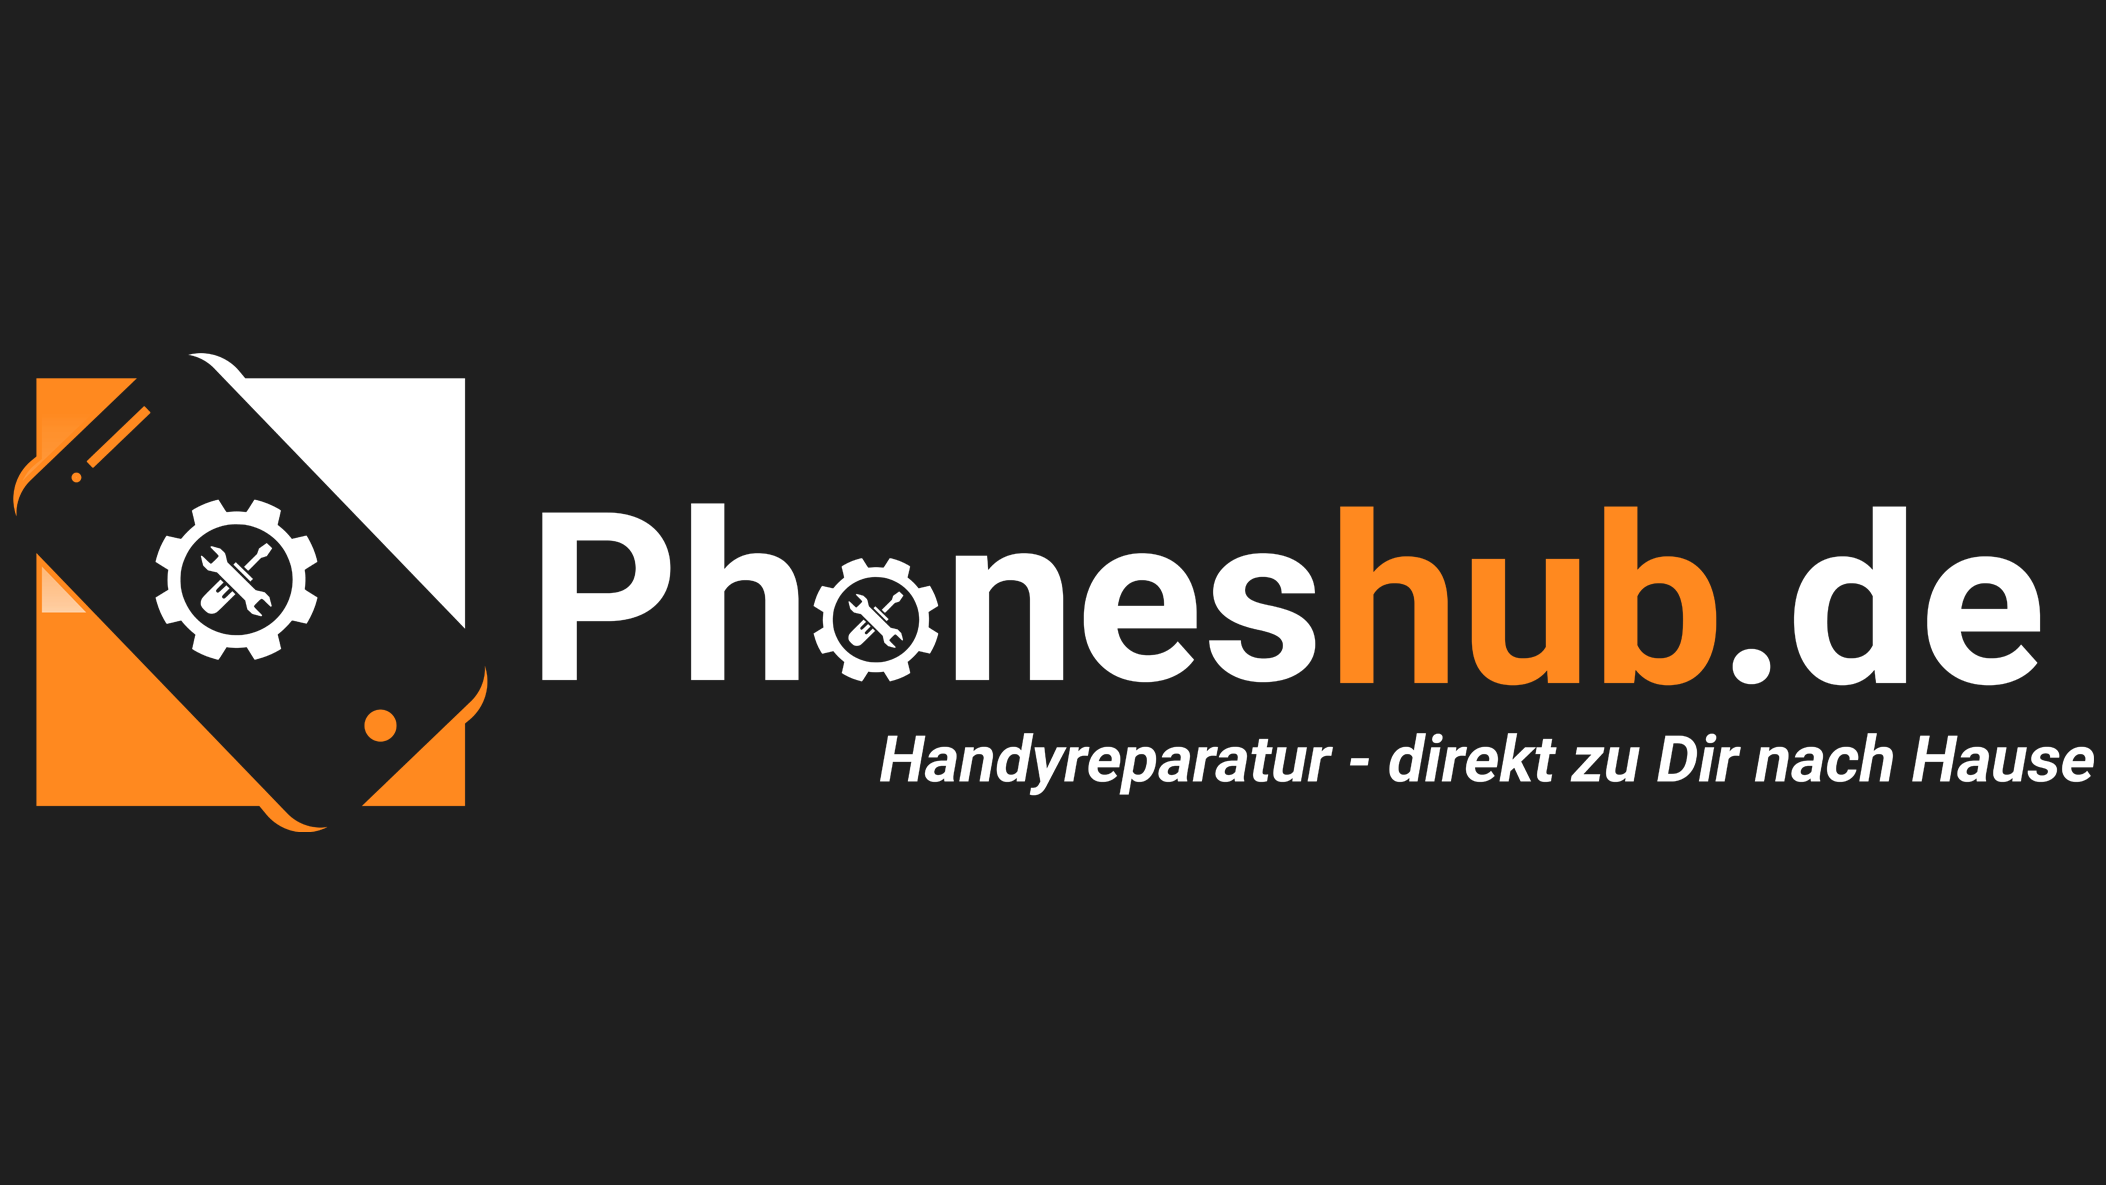 Kundenbild groß 4 phoneshub - Handyreparatur direkt zu Dir nach Hause